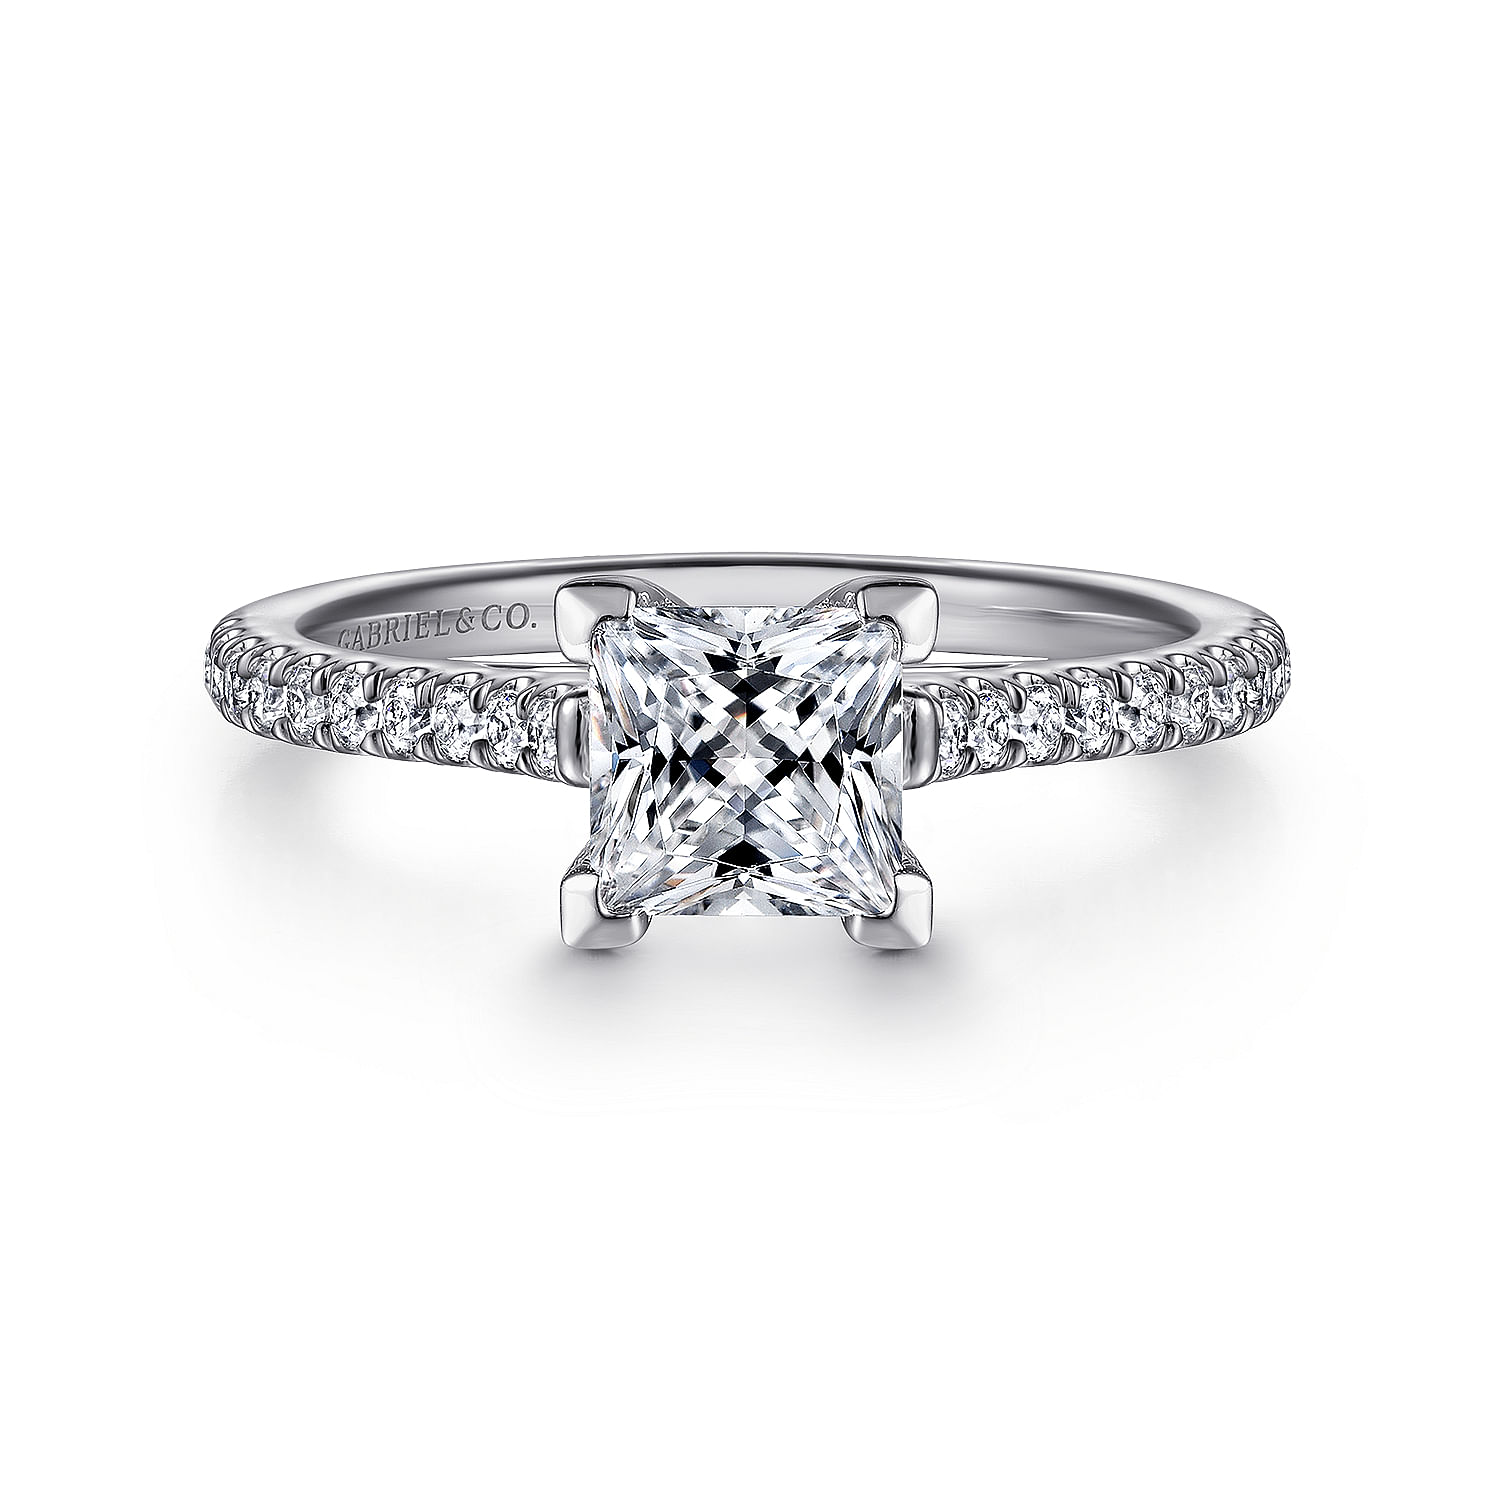 Joanna - 14K White Gold Princess Cut Diamond Engagement Ring